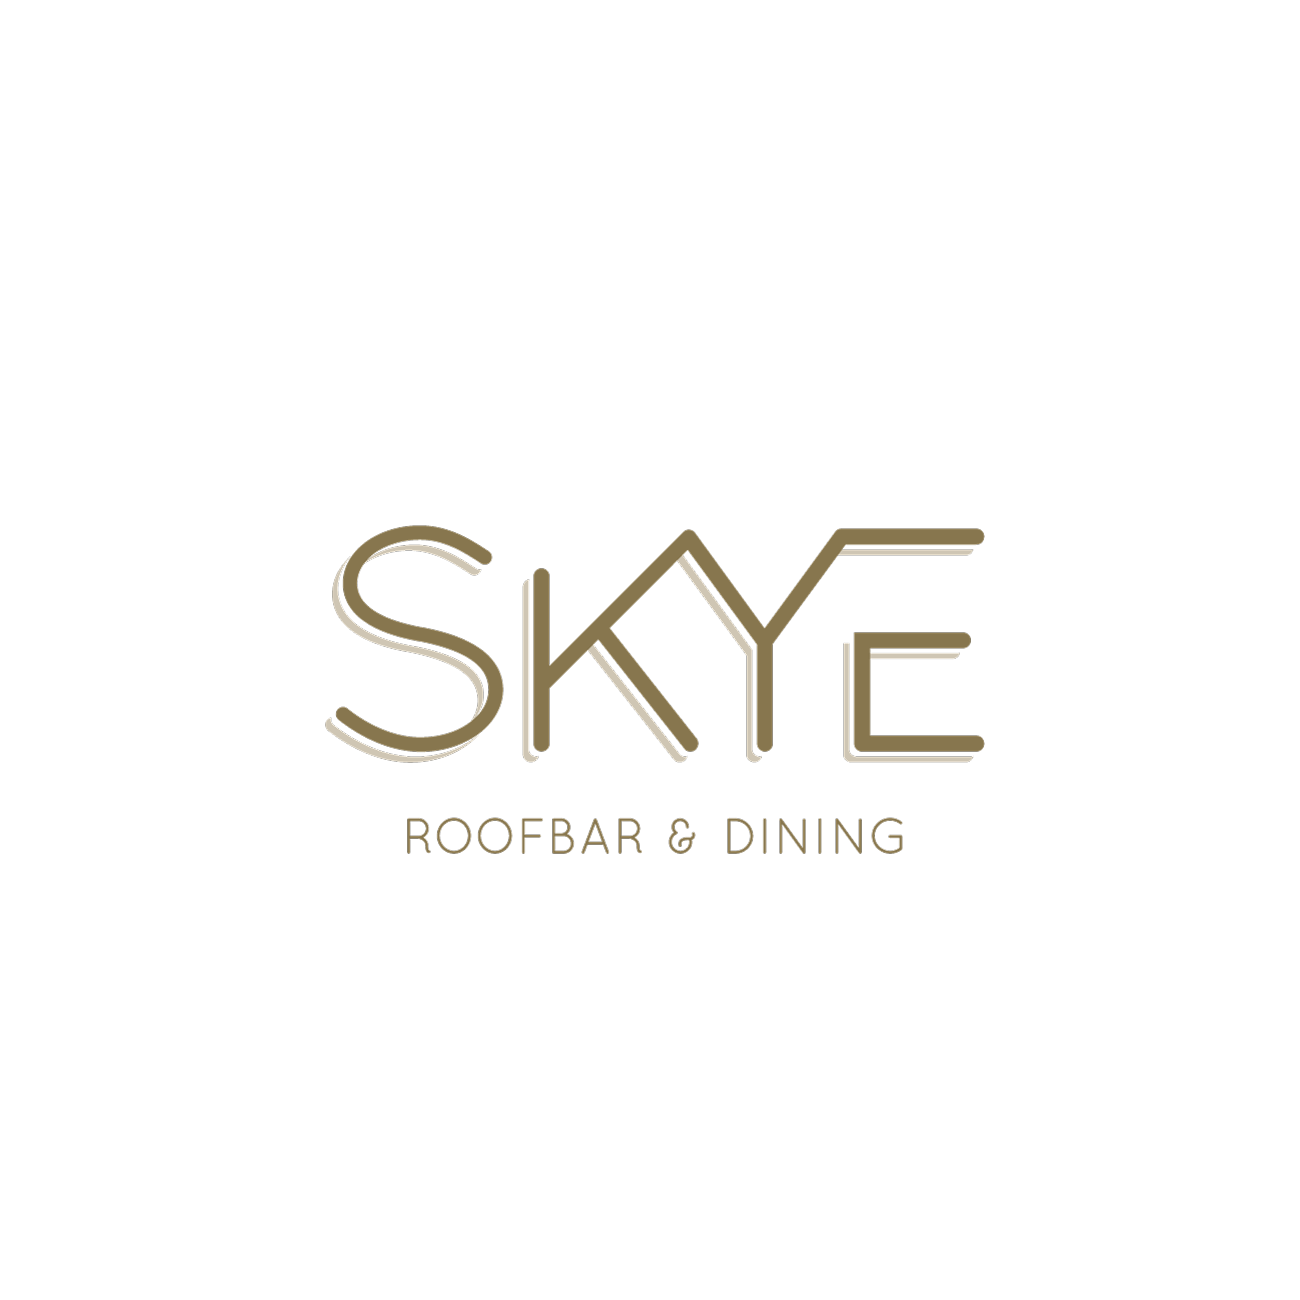 SKYE Roofbar & Dining Logo The Park Lane Hong Kong, a Pullman Hotel